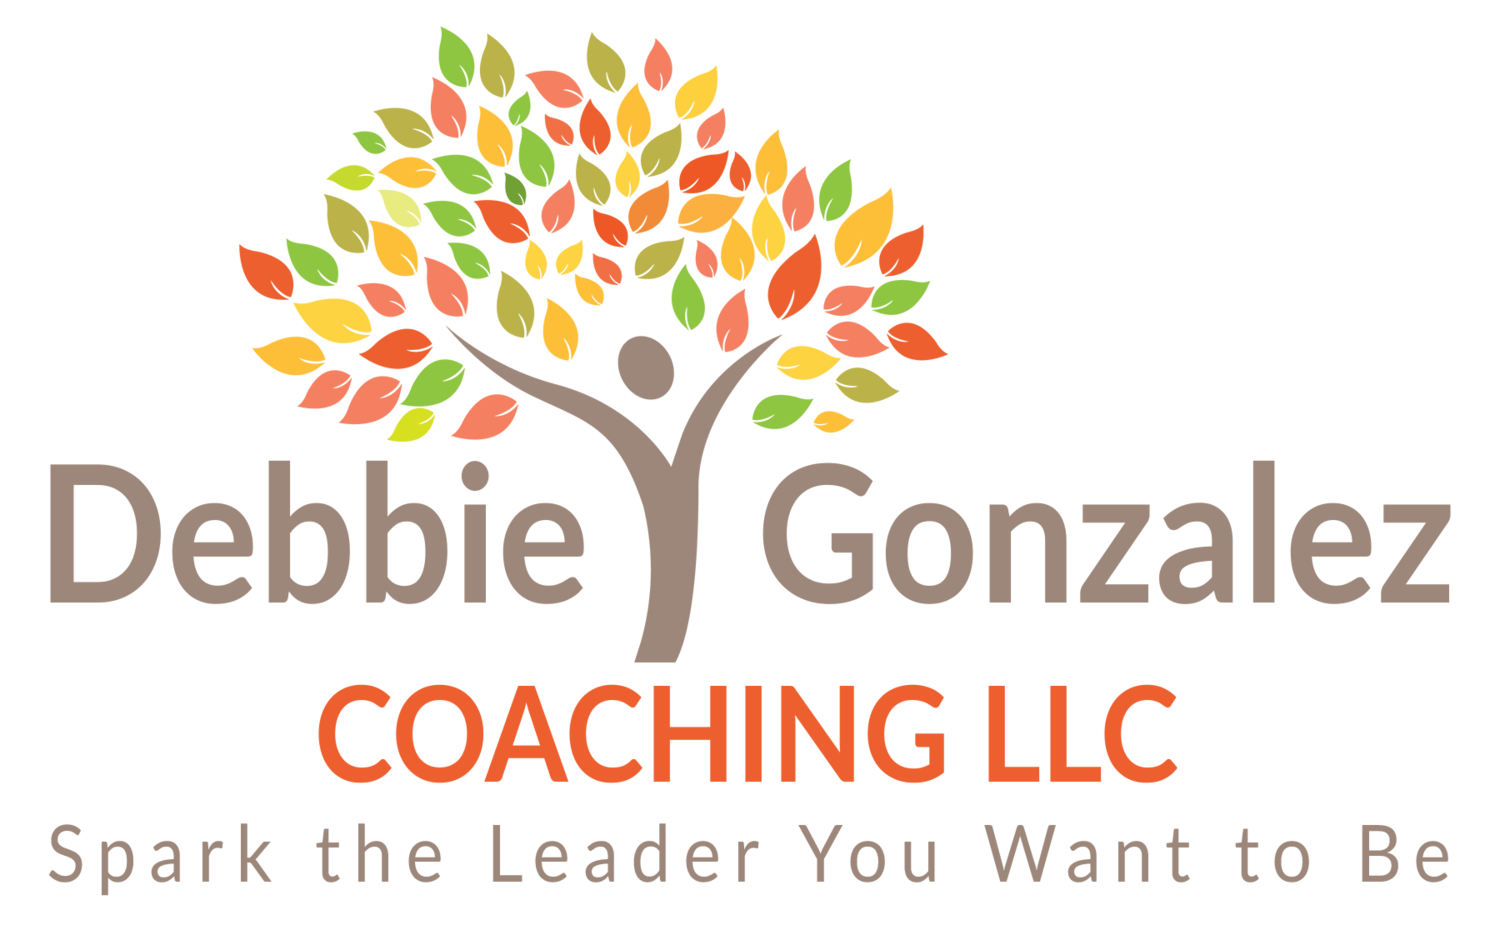 Debbie Gonzalez Coaching LLC